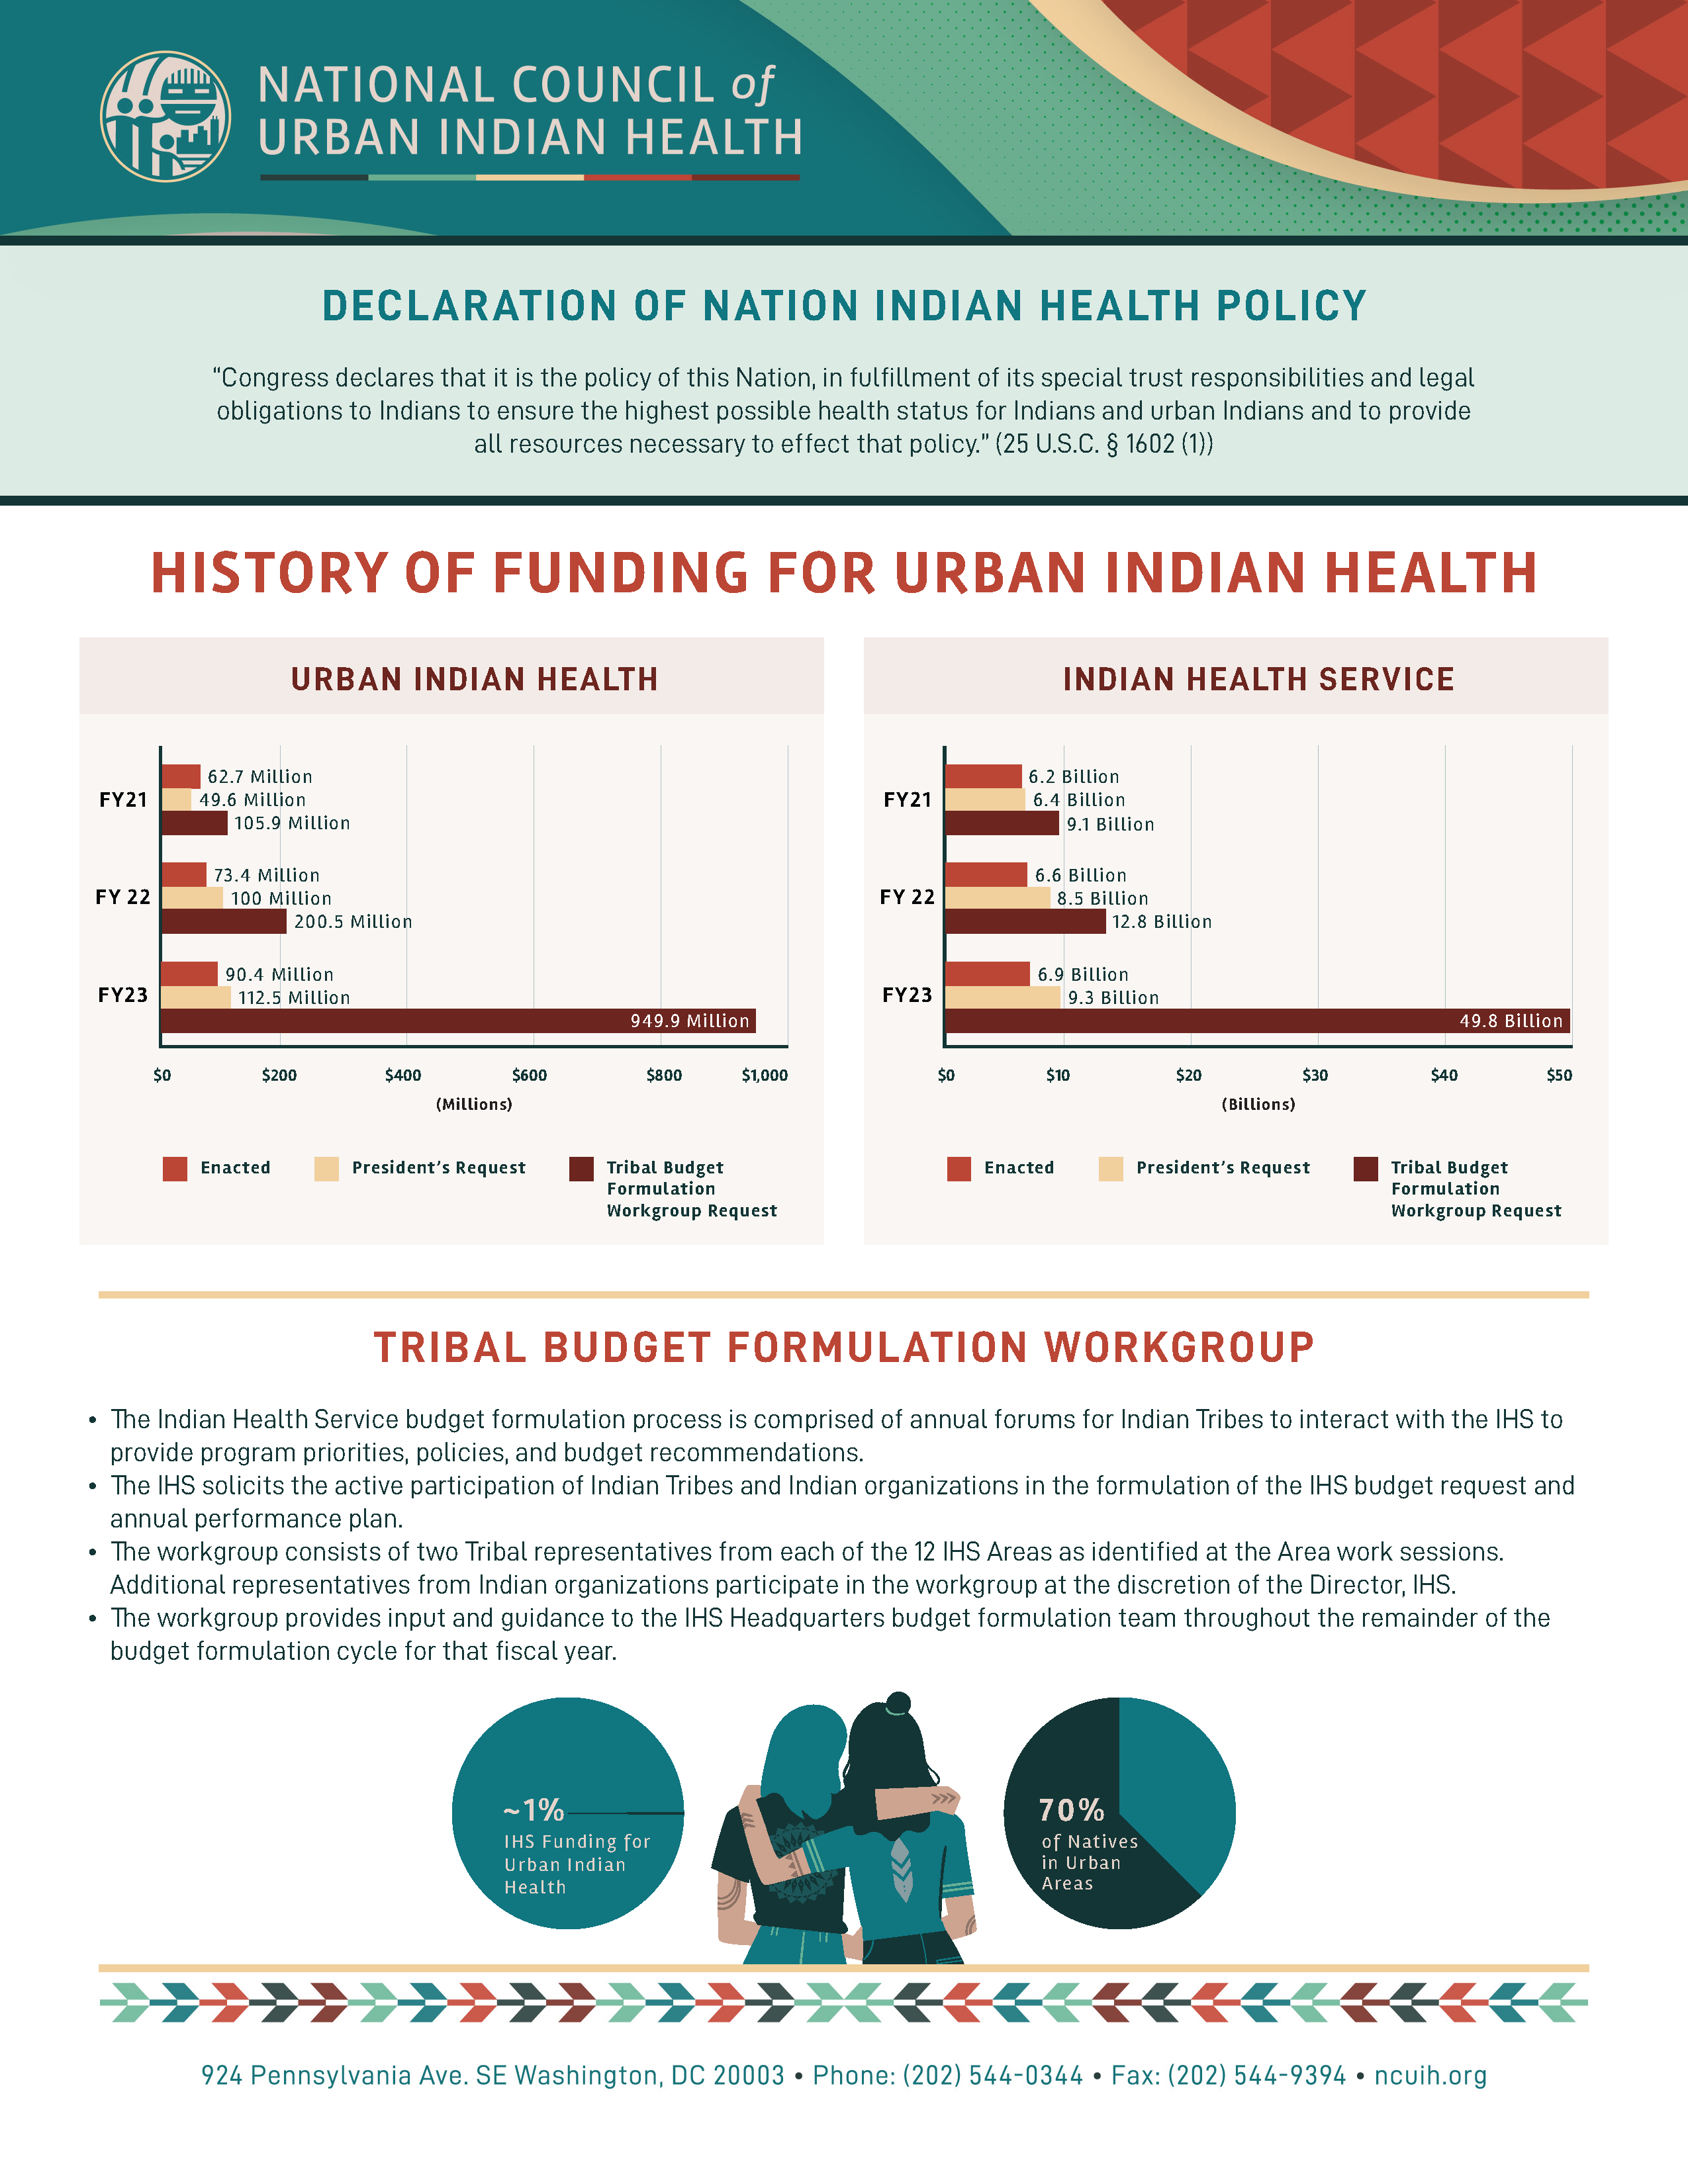 Urban Indian Health Funding (FY 2021-2023)